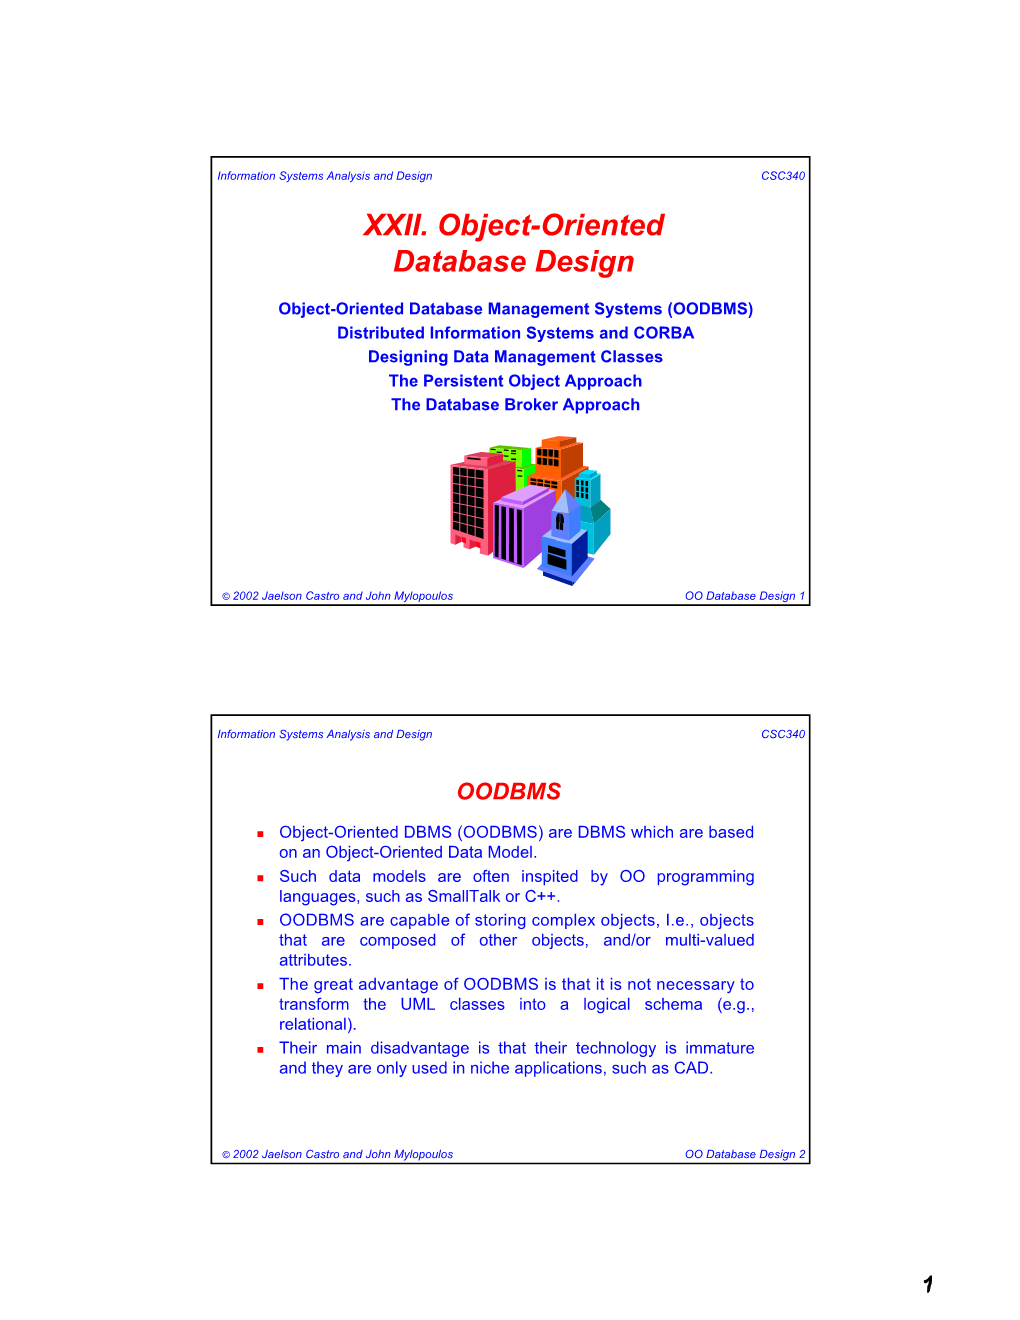 XXII. Object-Oriented Database Design